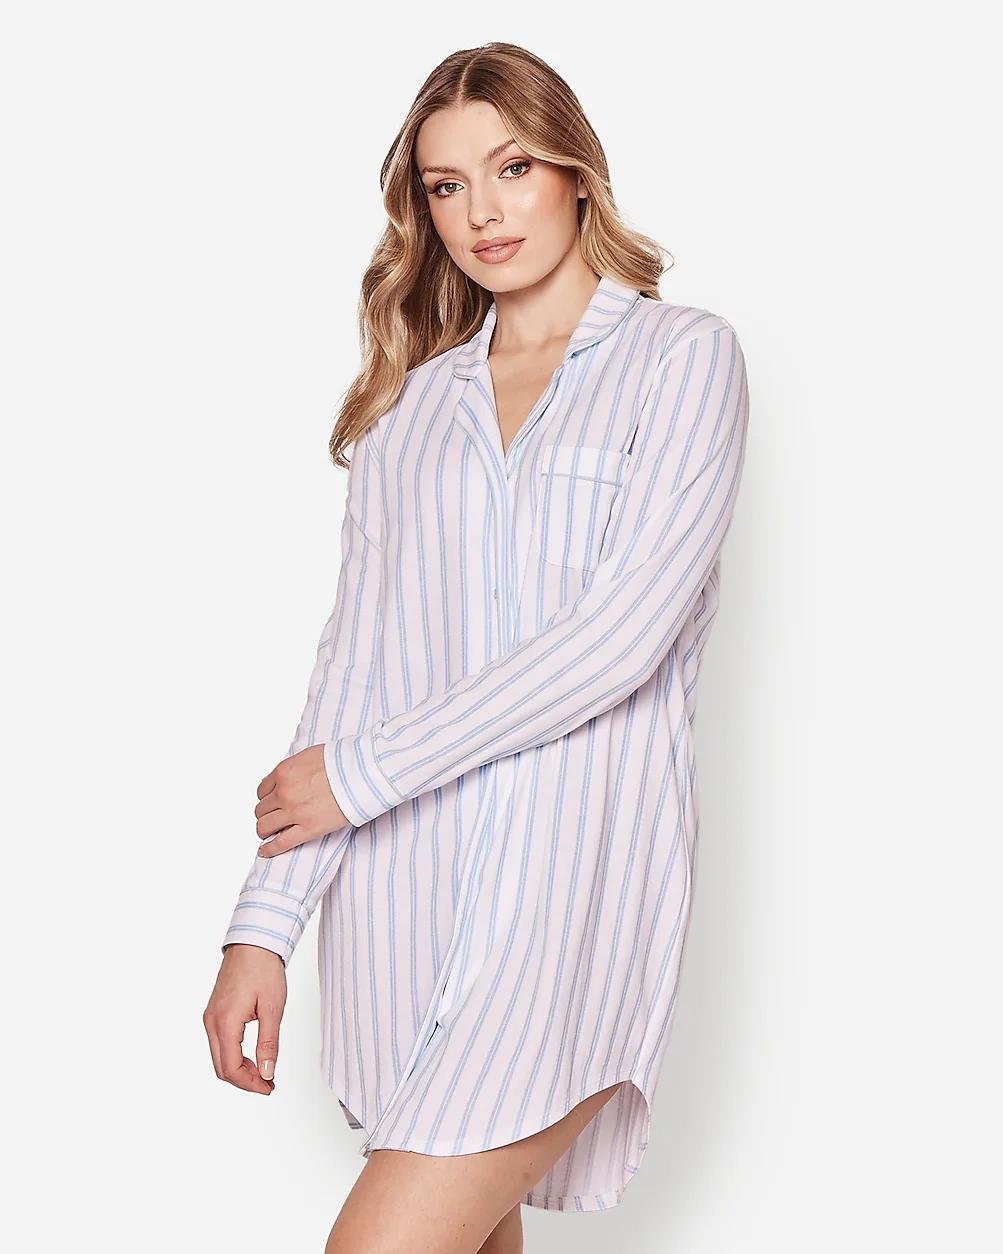 Petite Plume™ women's nightshirt in luxe Pima cotton stripe by J.CREW